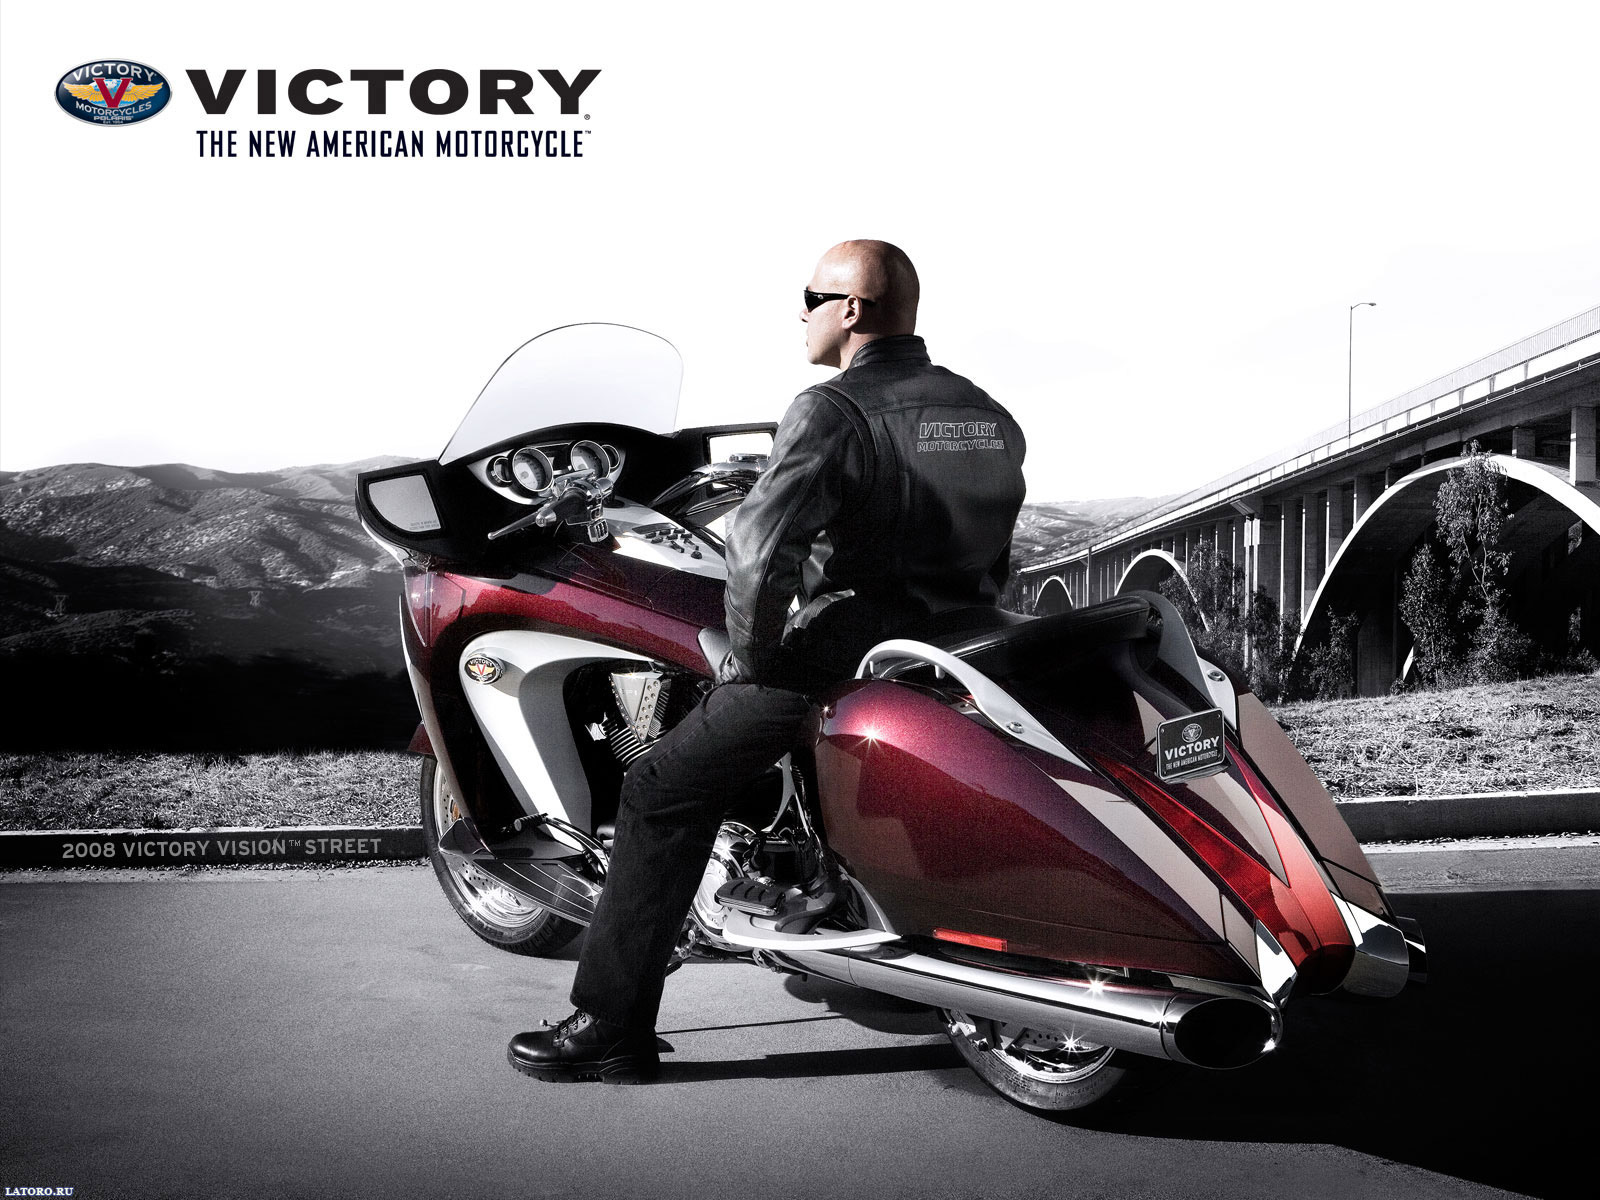 Victory Vision Desktop Wallpaper On Latoro